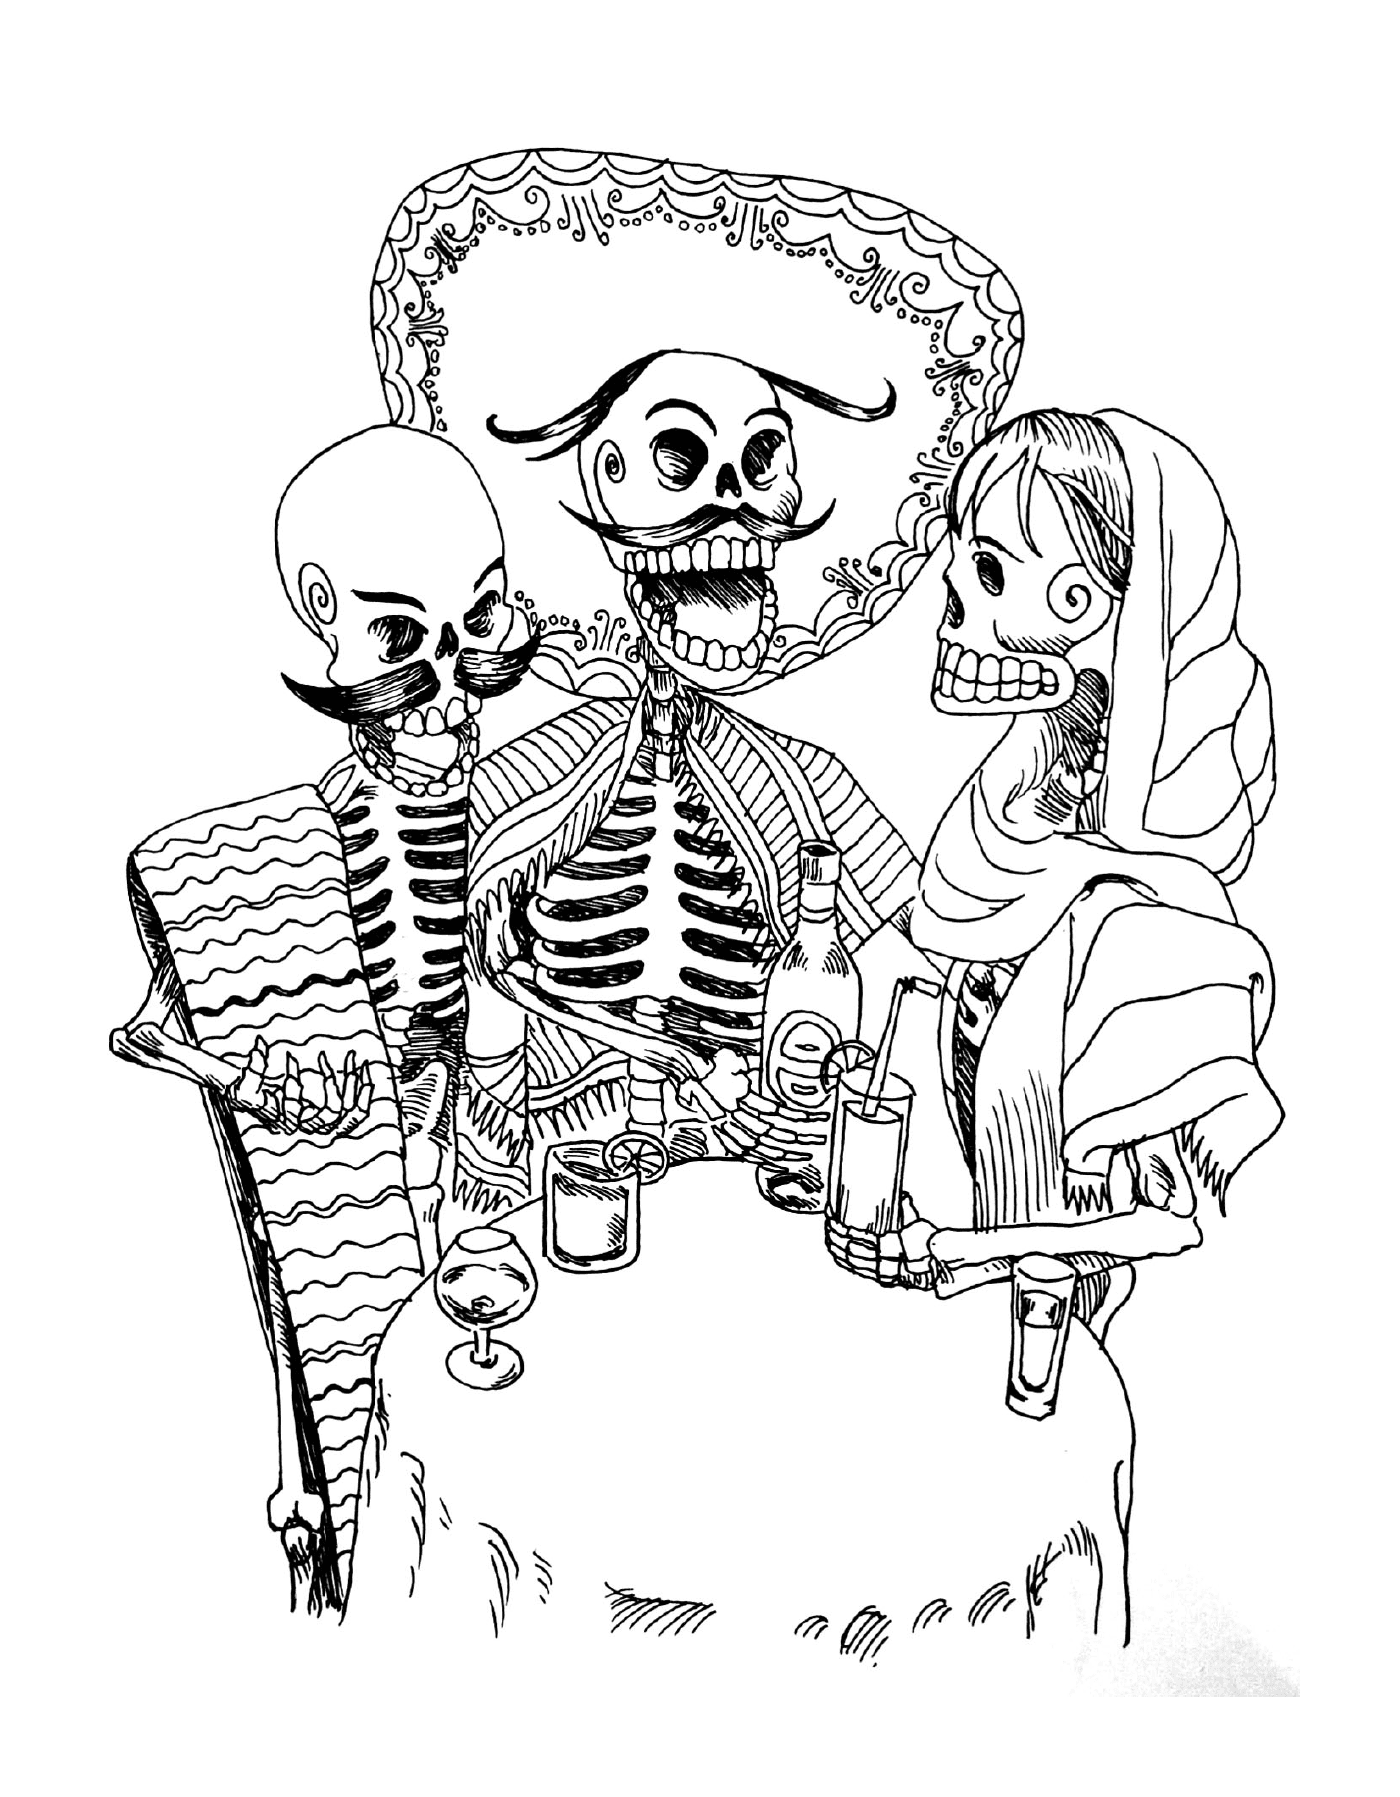  два скелета и одна женщина 